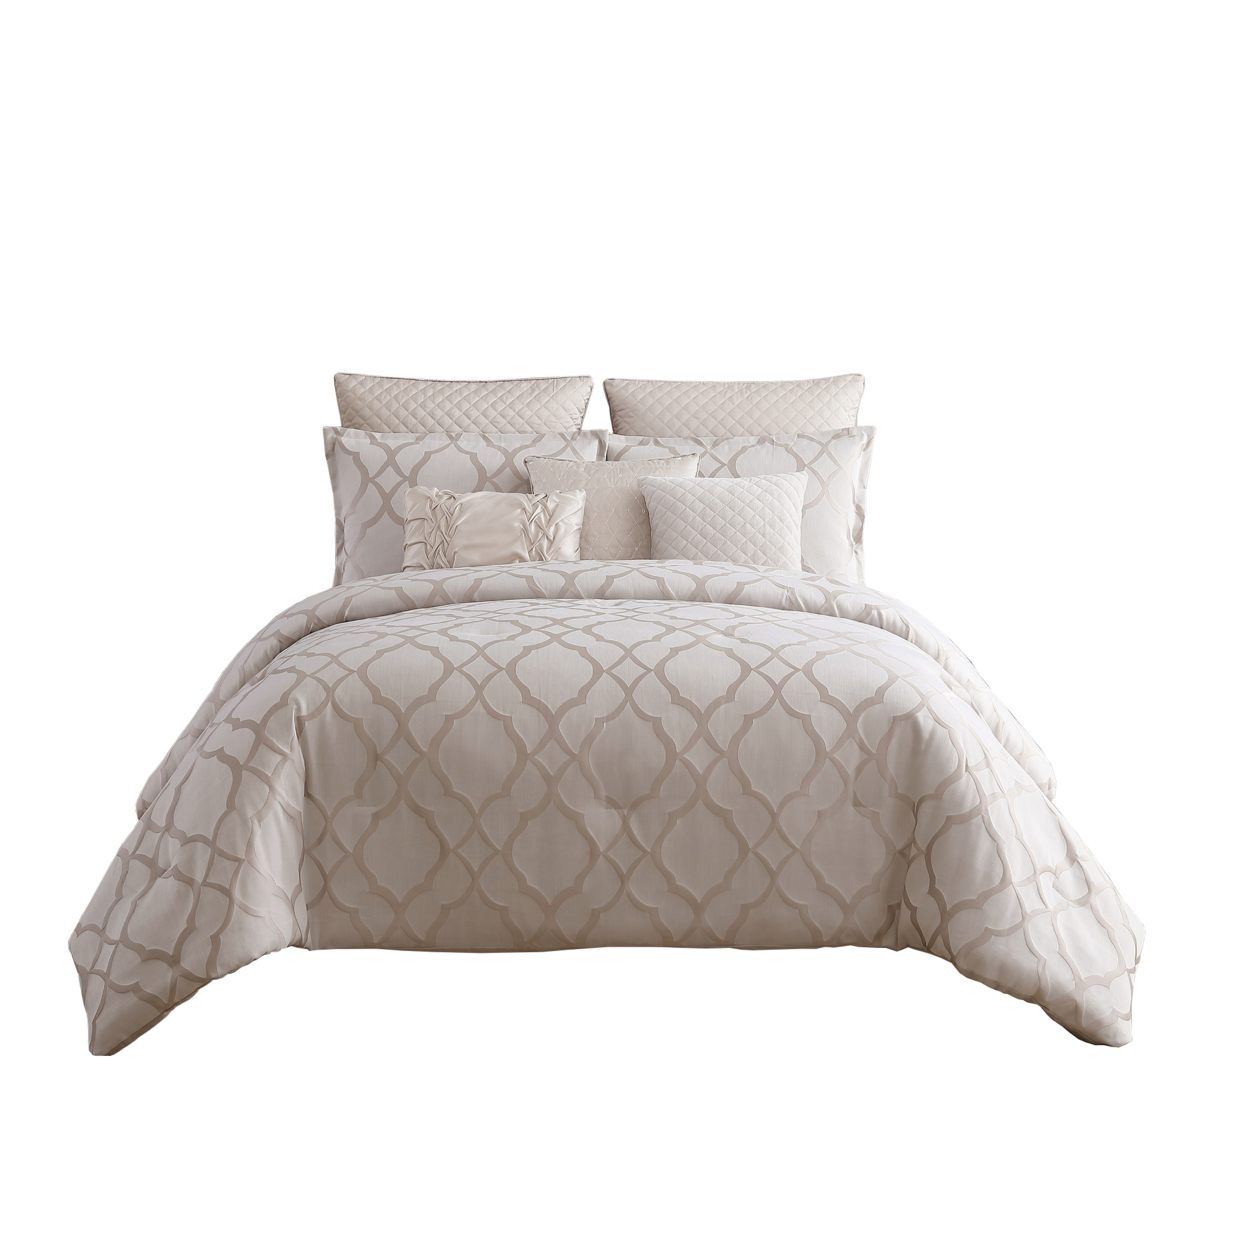 9 Piece Queen Size Fabric Comforter Set With Quatrefoil Prints, White- Saltoro Sherpi